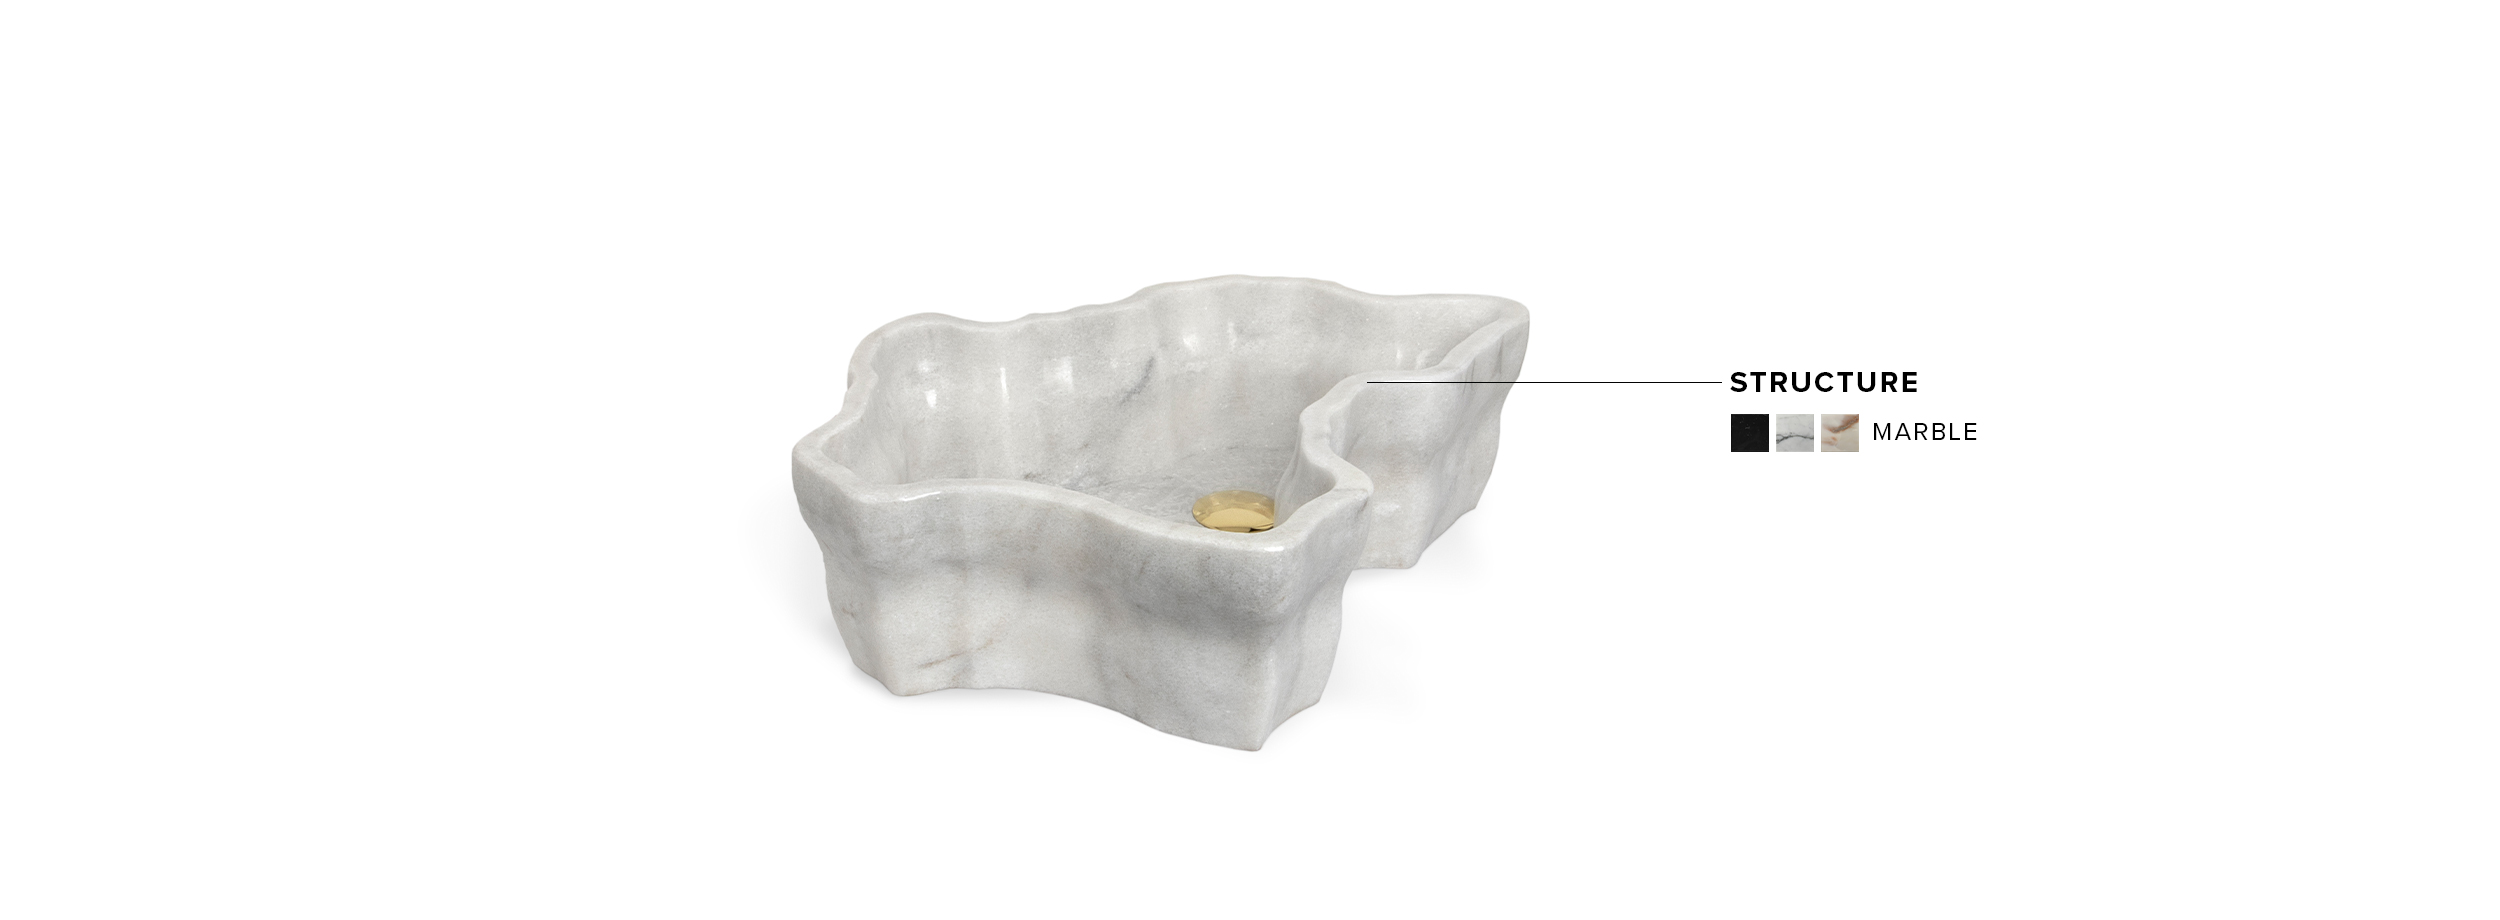 Eden Estremoz White Marble Sink with Gold Details Modern Design - Home'Society